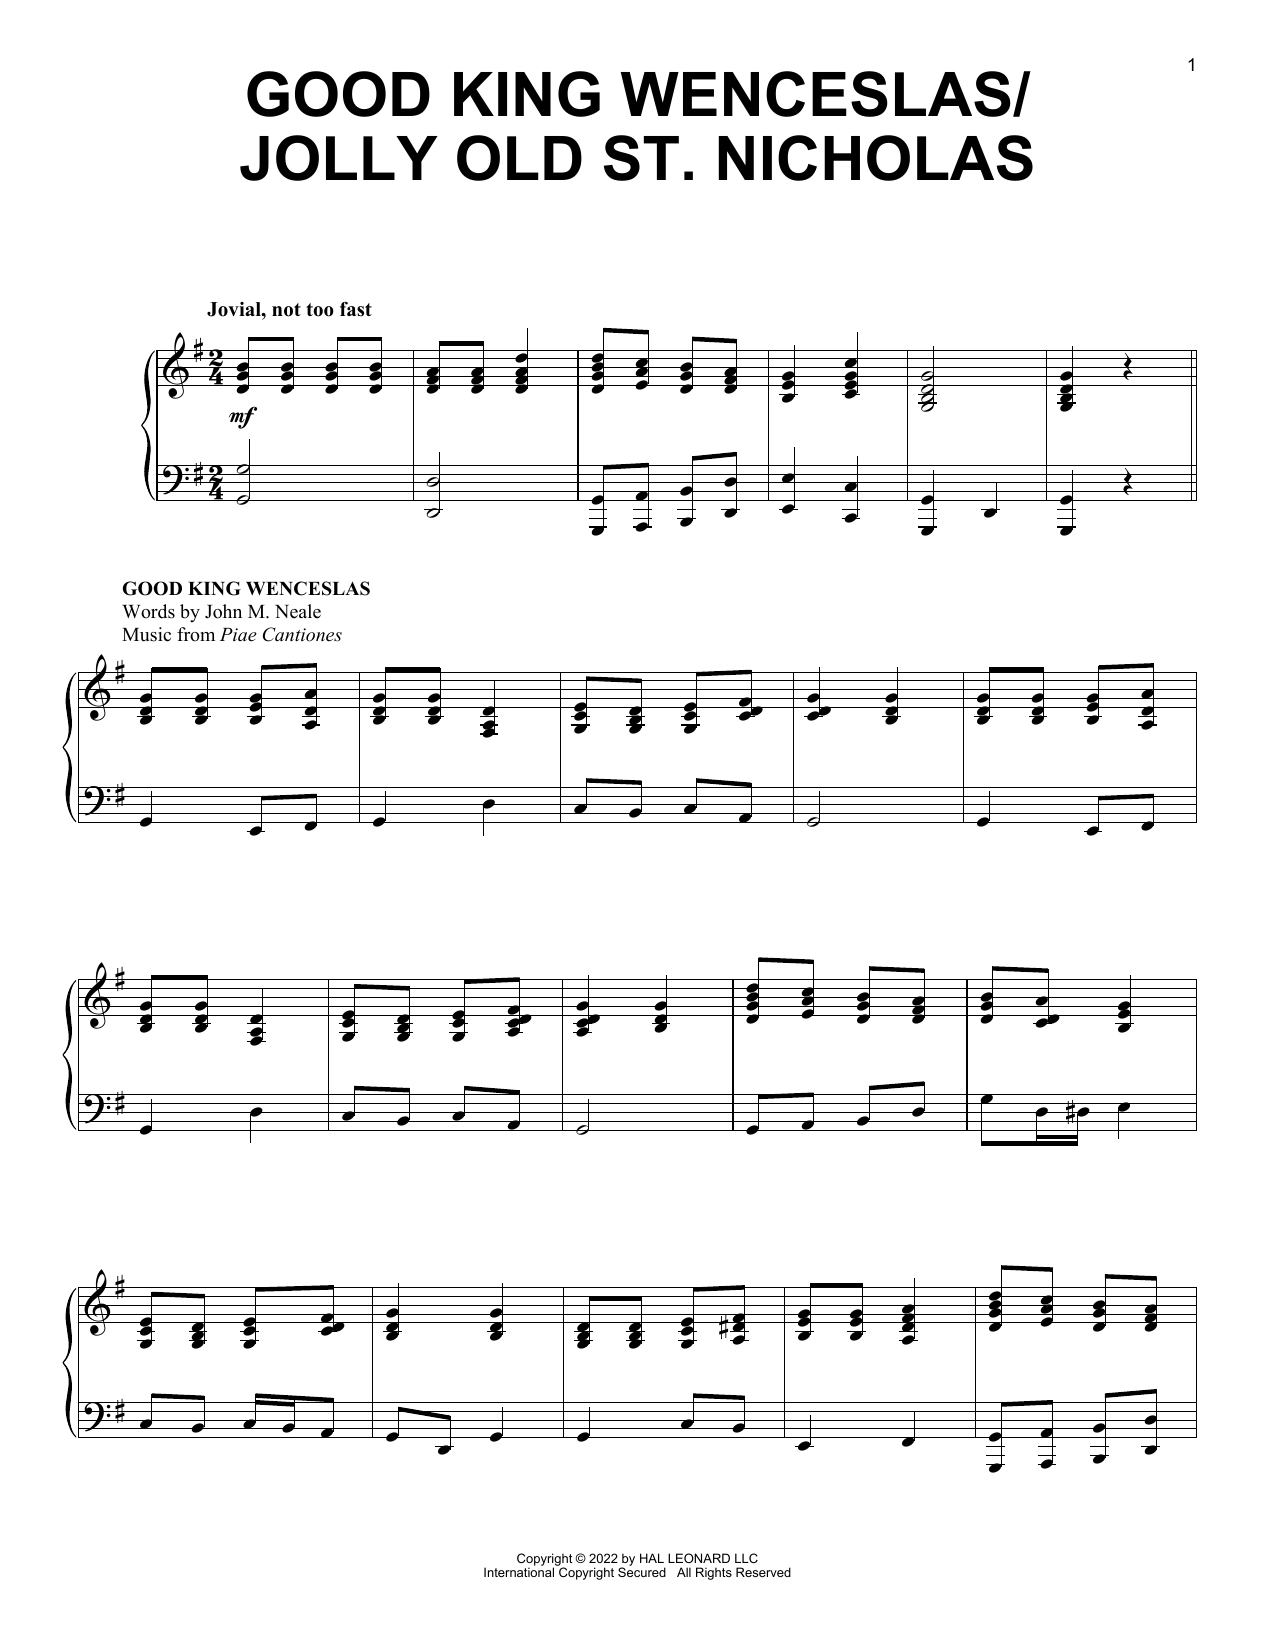 Various Good King Wenceslas/Jolly Old Saint Nicholas Sheet Music Notes & Chords for Lead Sheet / Fake Book - Download or Print PDF